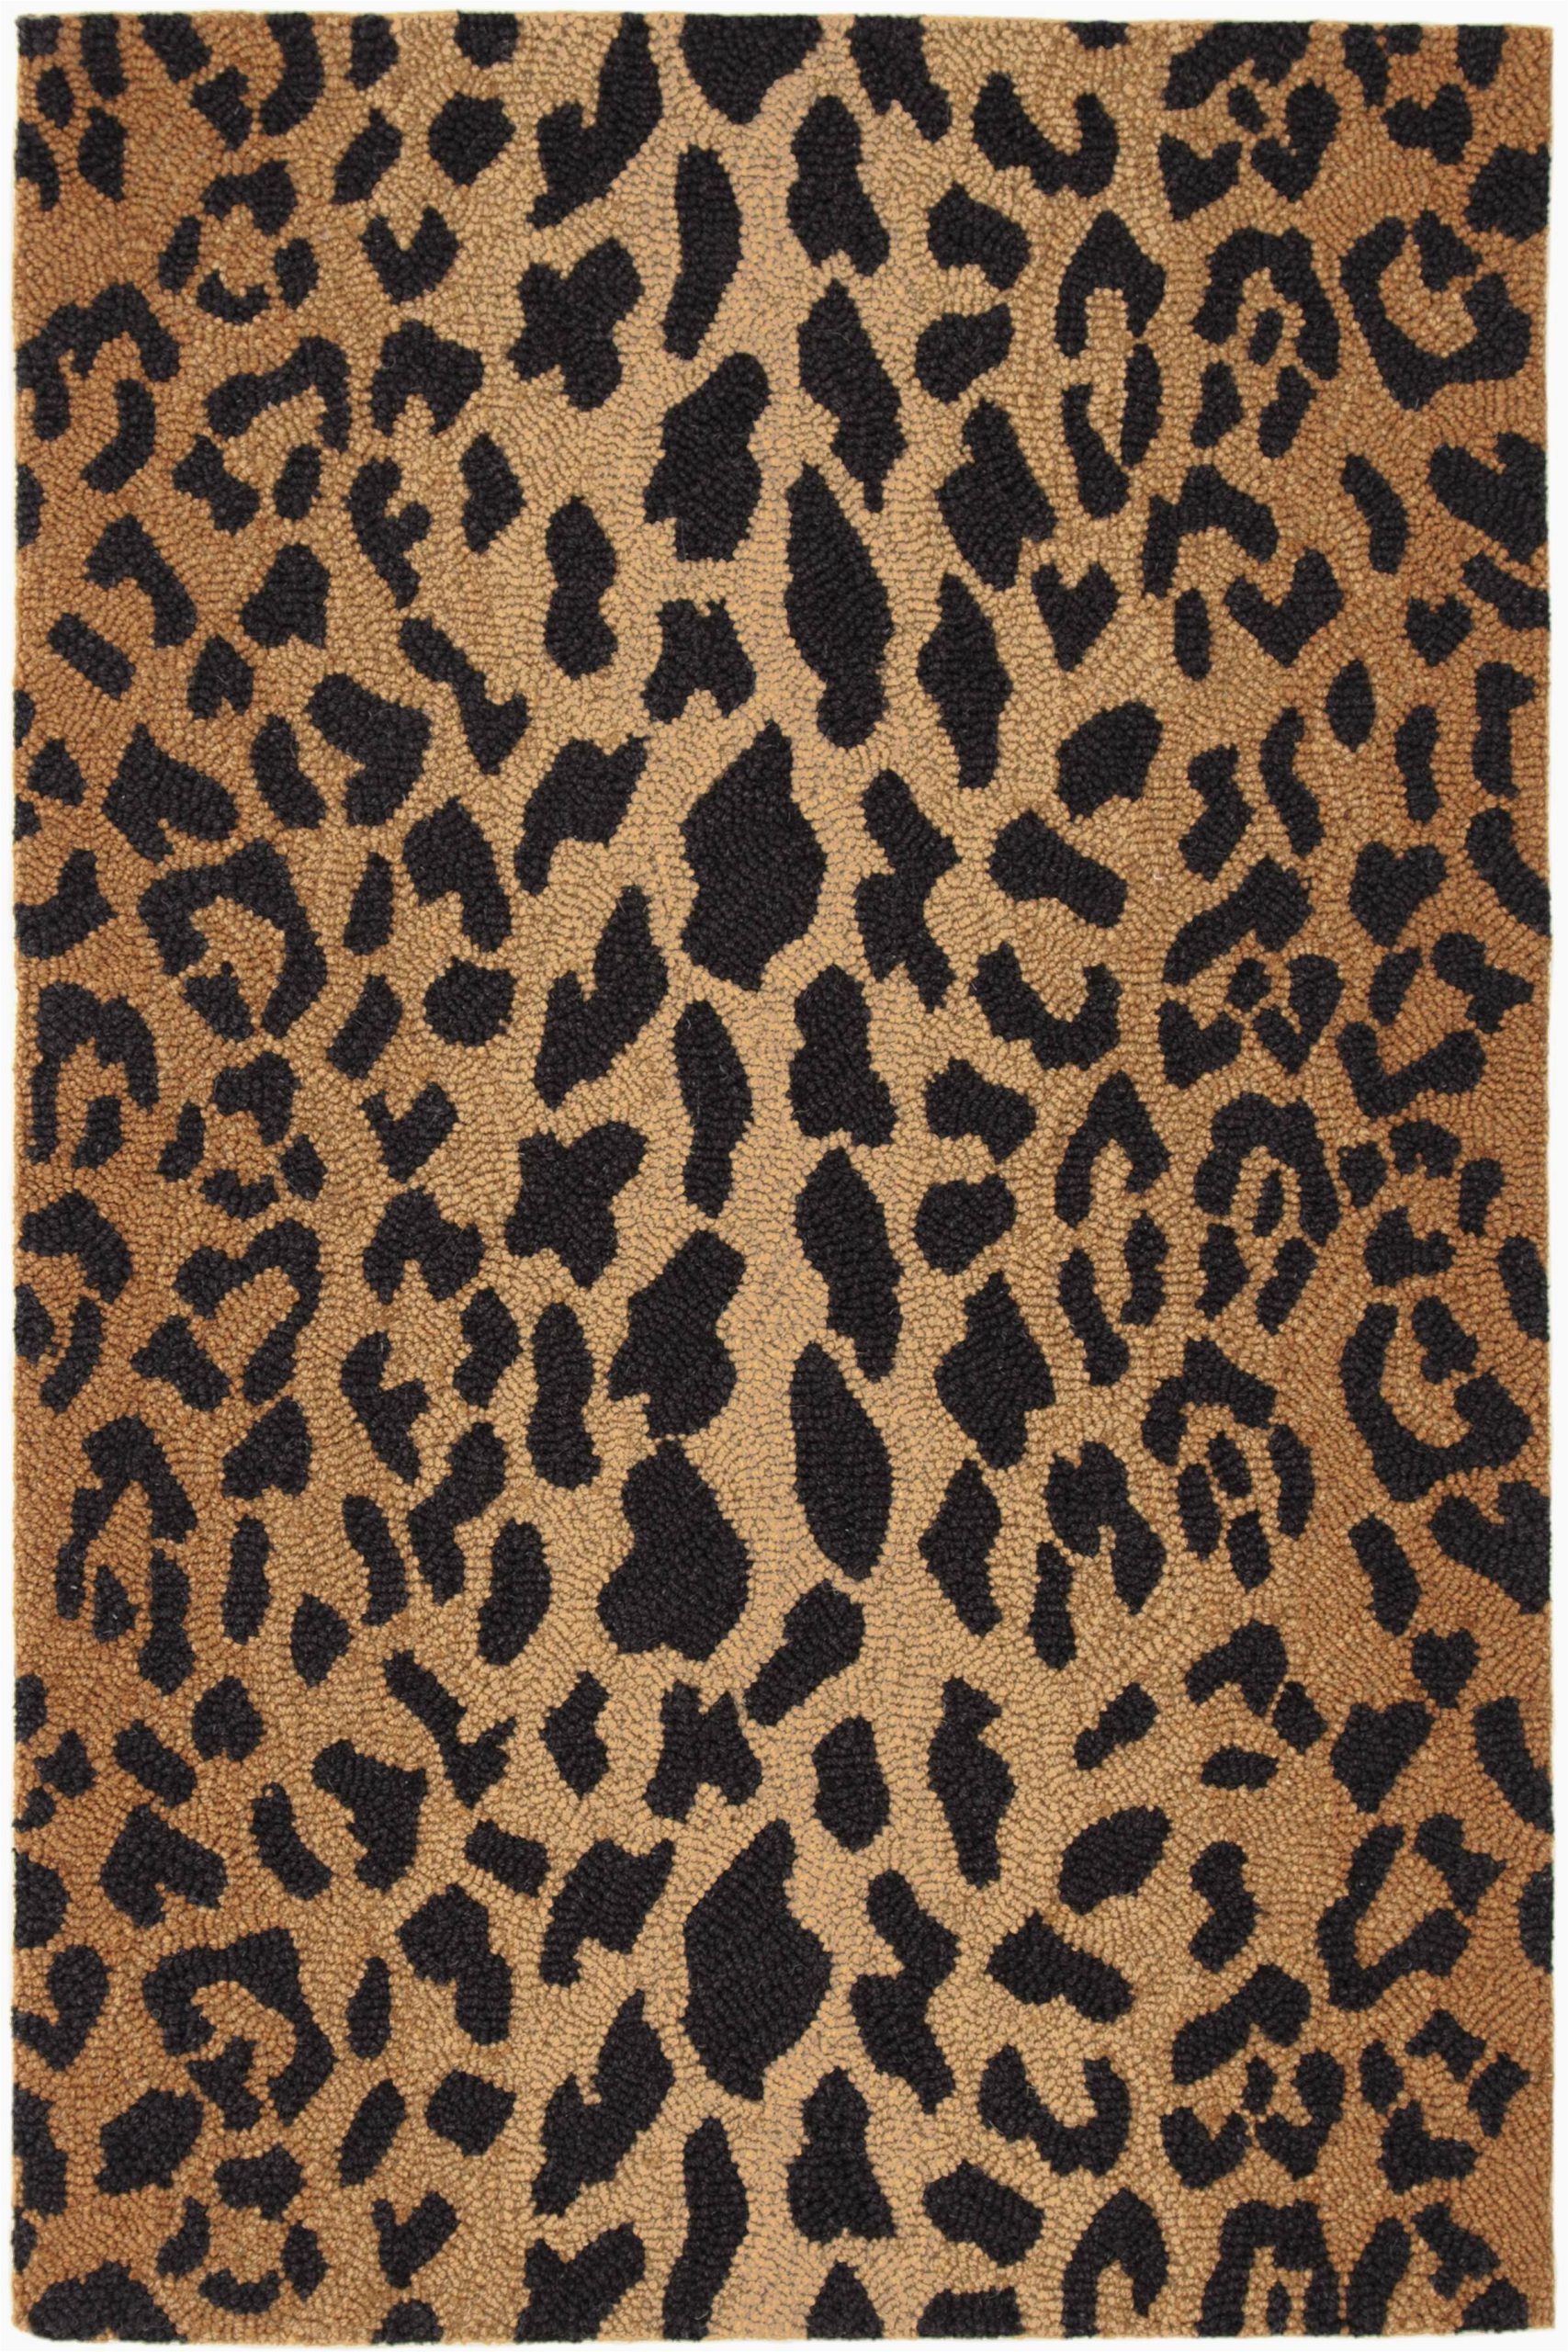 Round Animal Print area Rugs Leopard Animal Print Hand Hooked Wool Brown Black area Rug